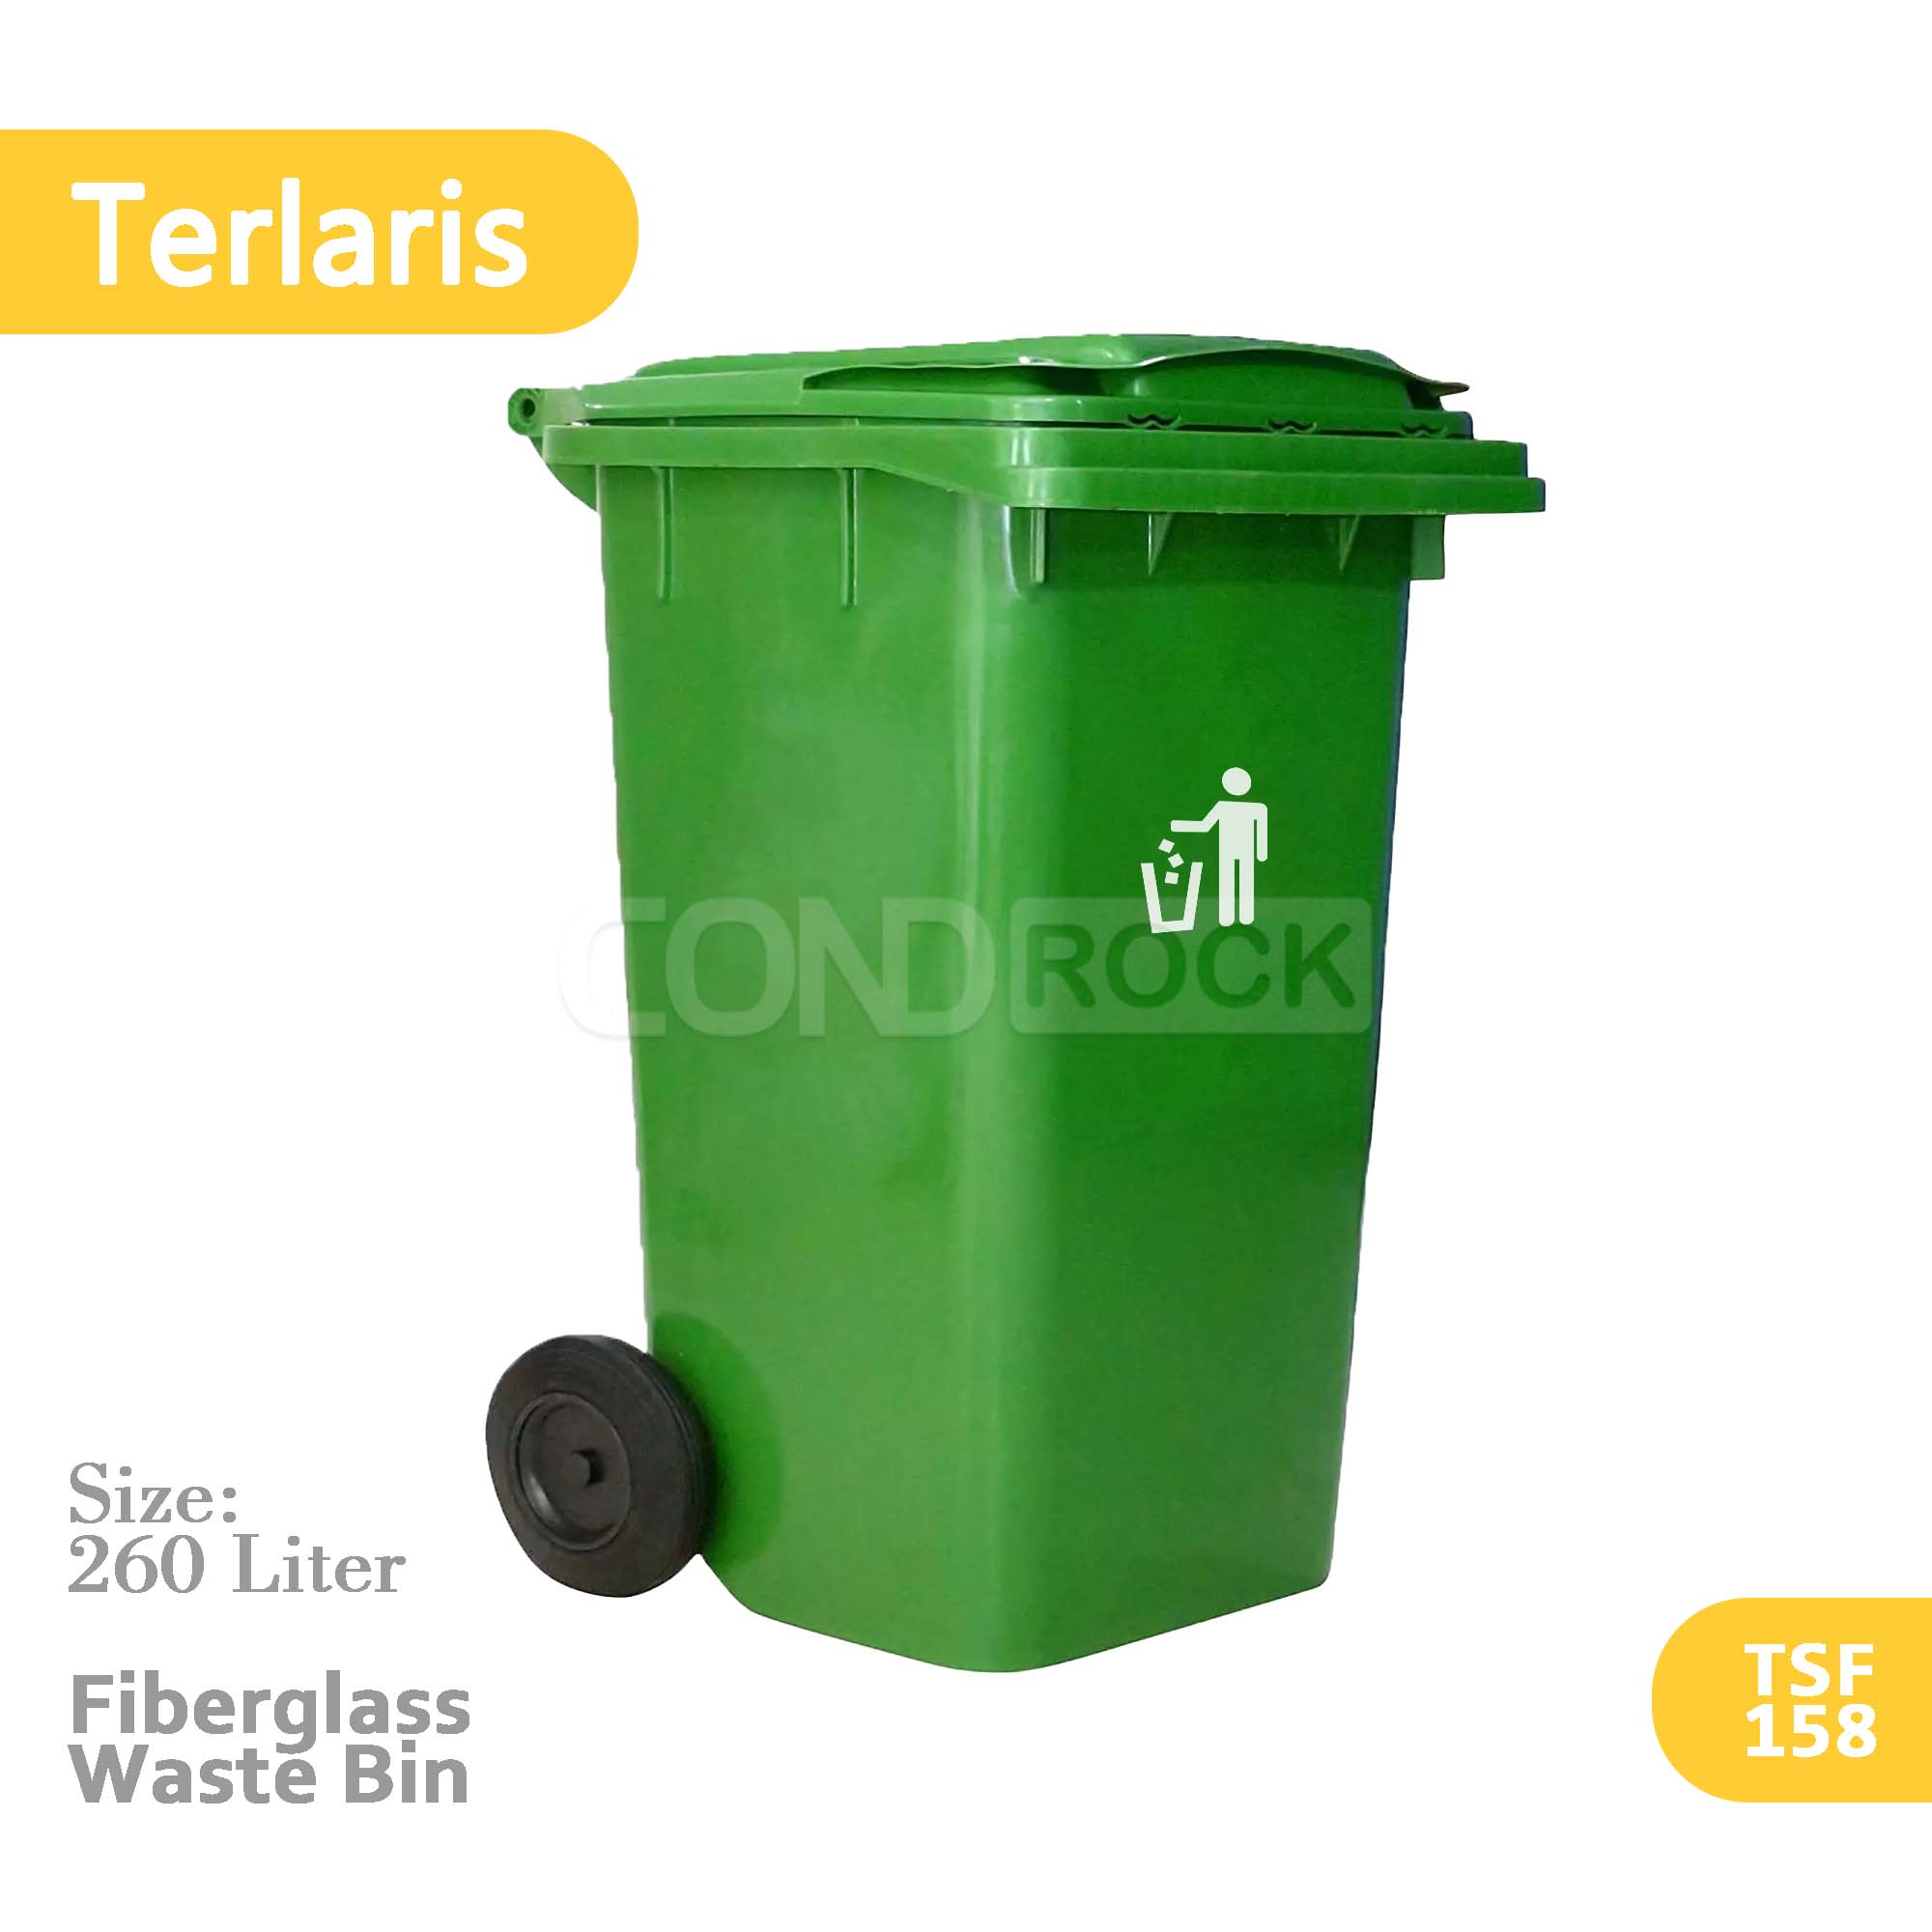 Fiberglass Waste Bin 260 Liter